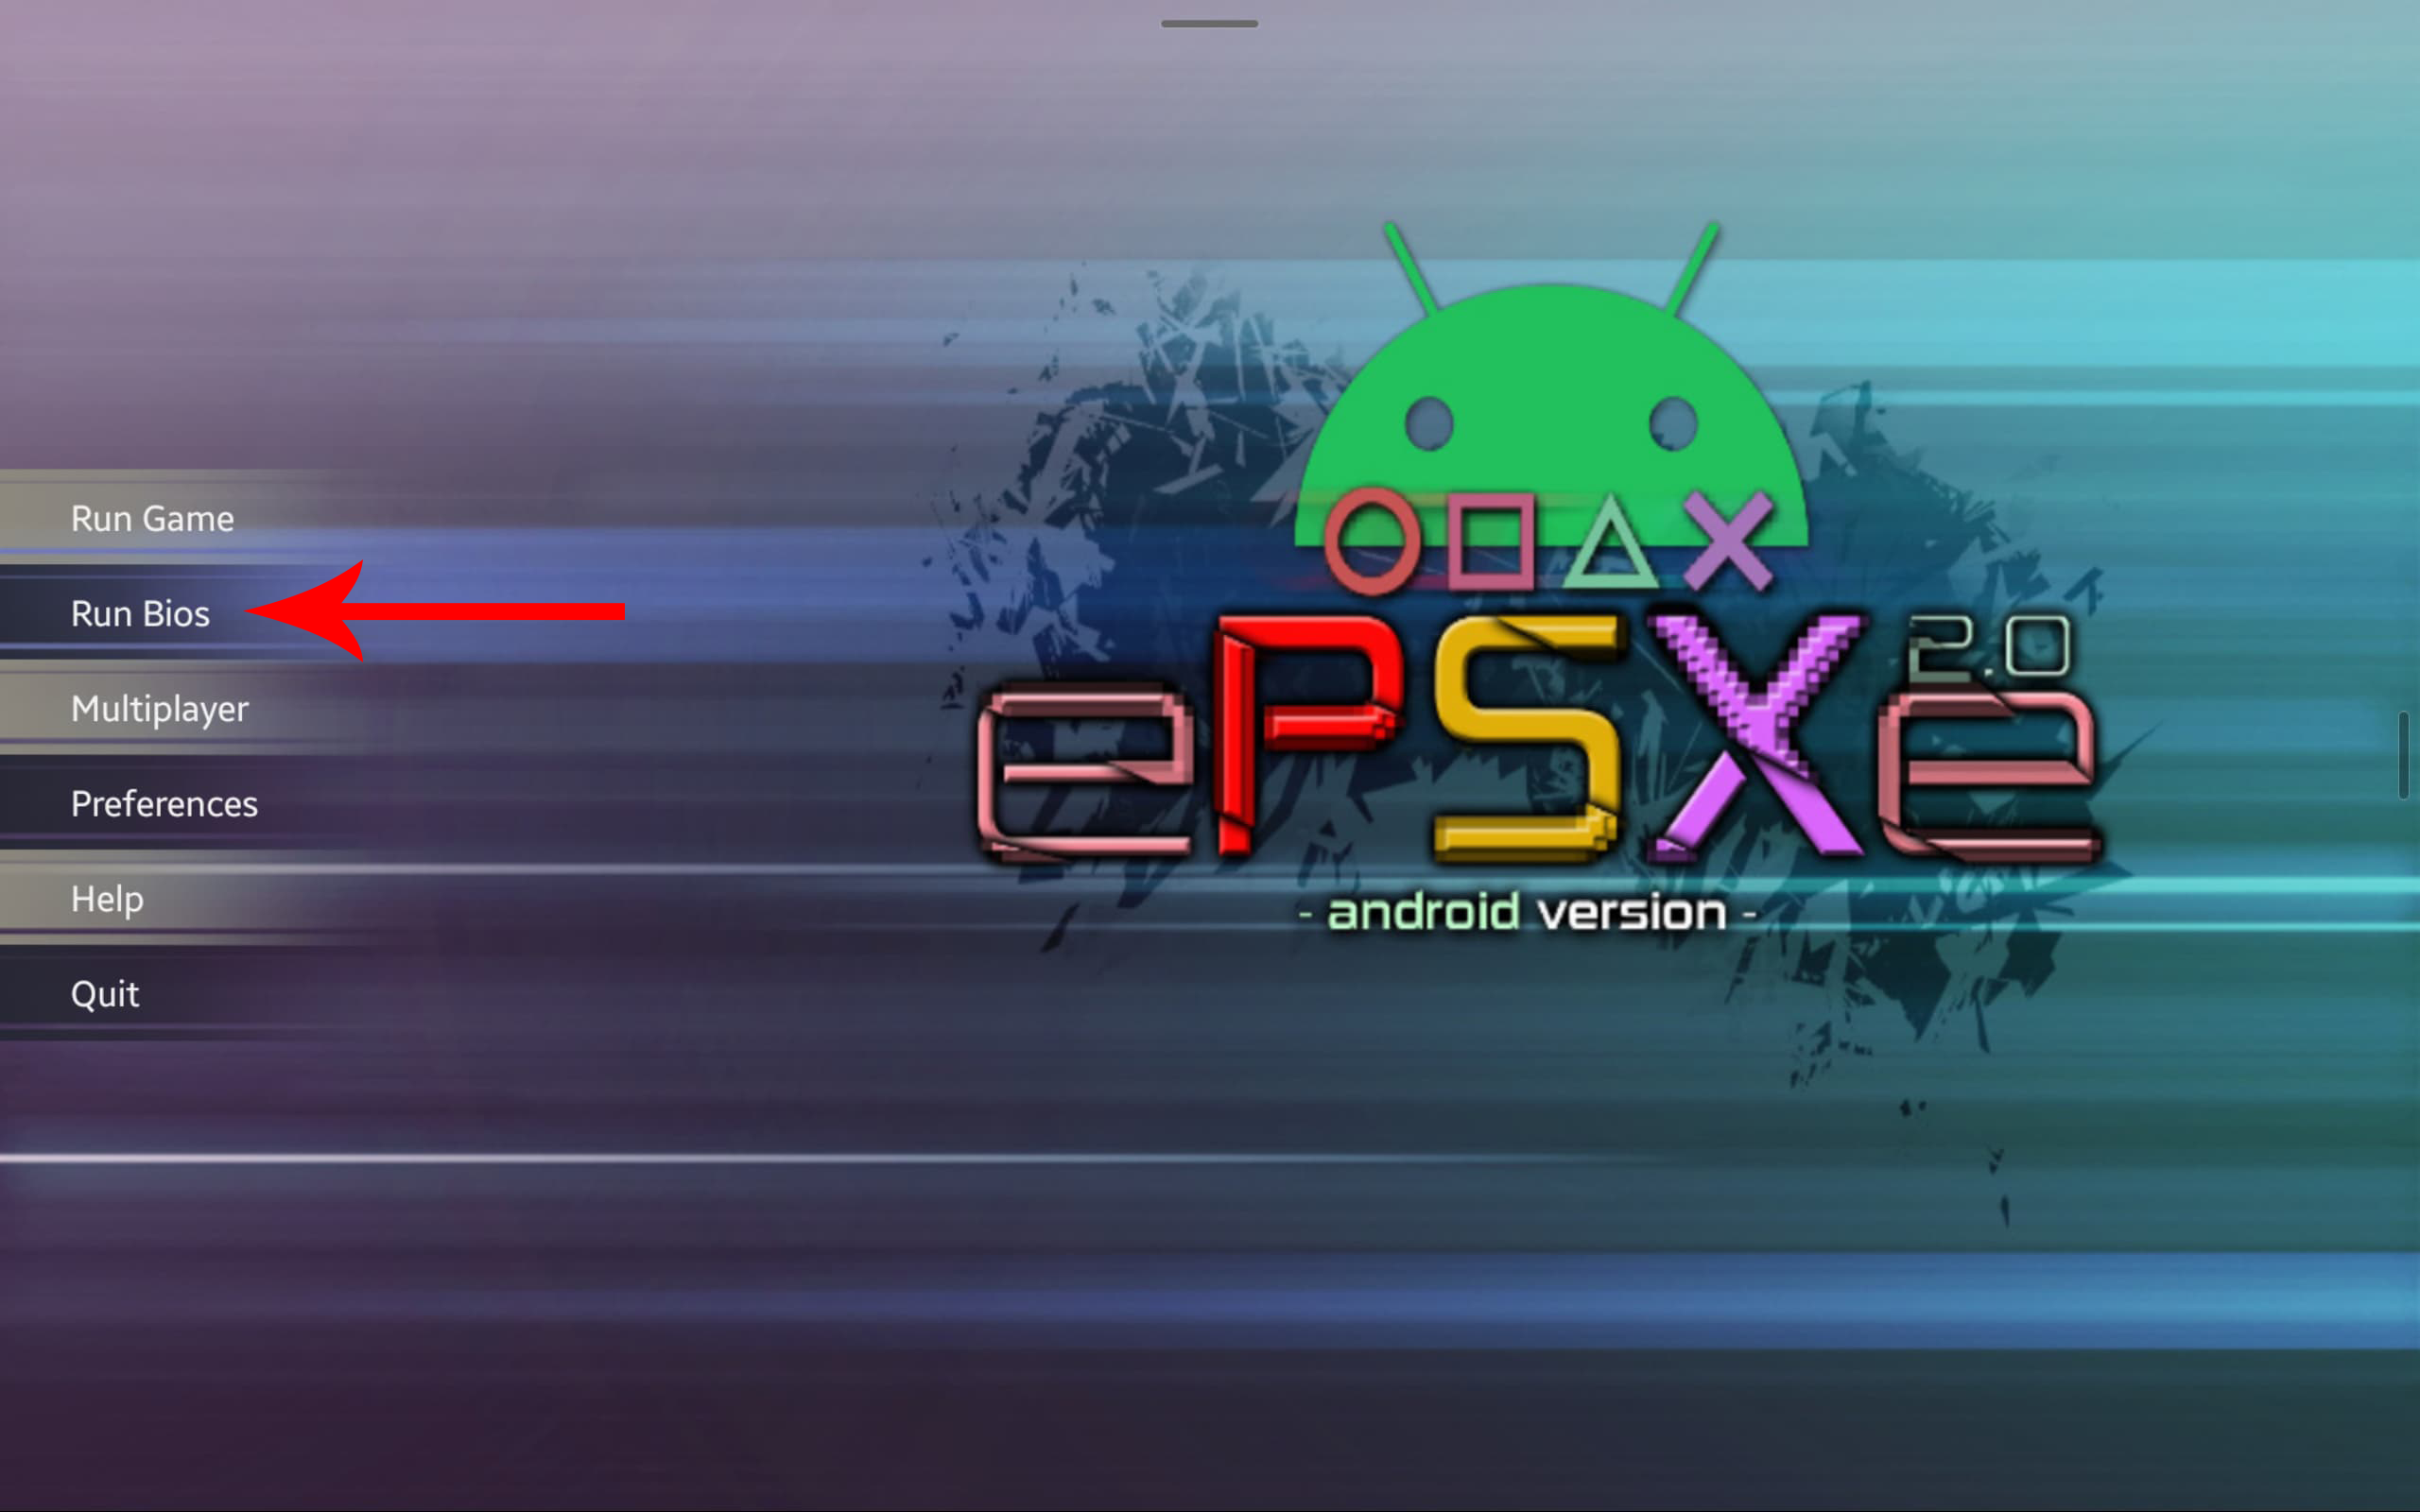 Screenshot of the ePSXe emulator homescreen with an arrow pointing at the 'Run Bios' button.